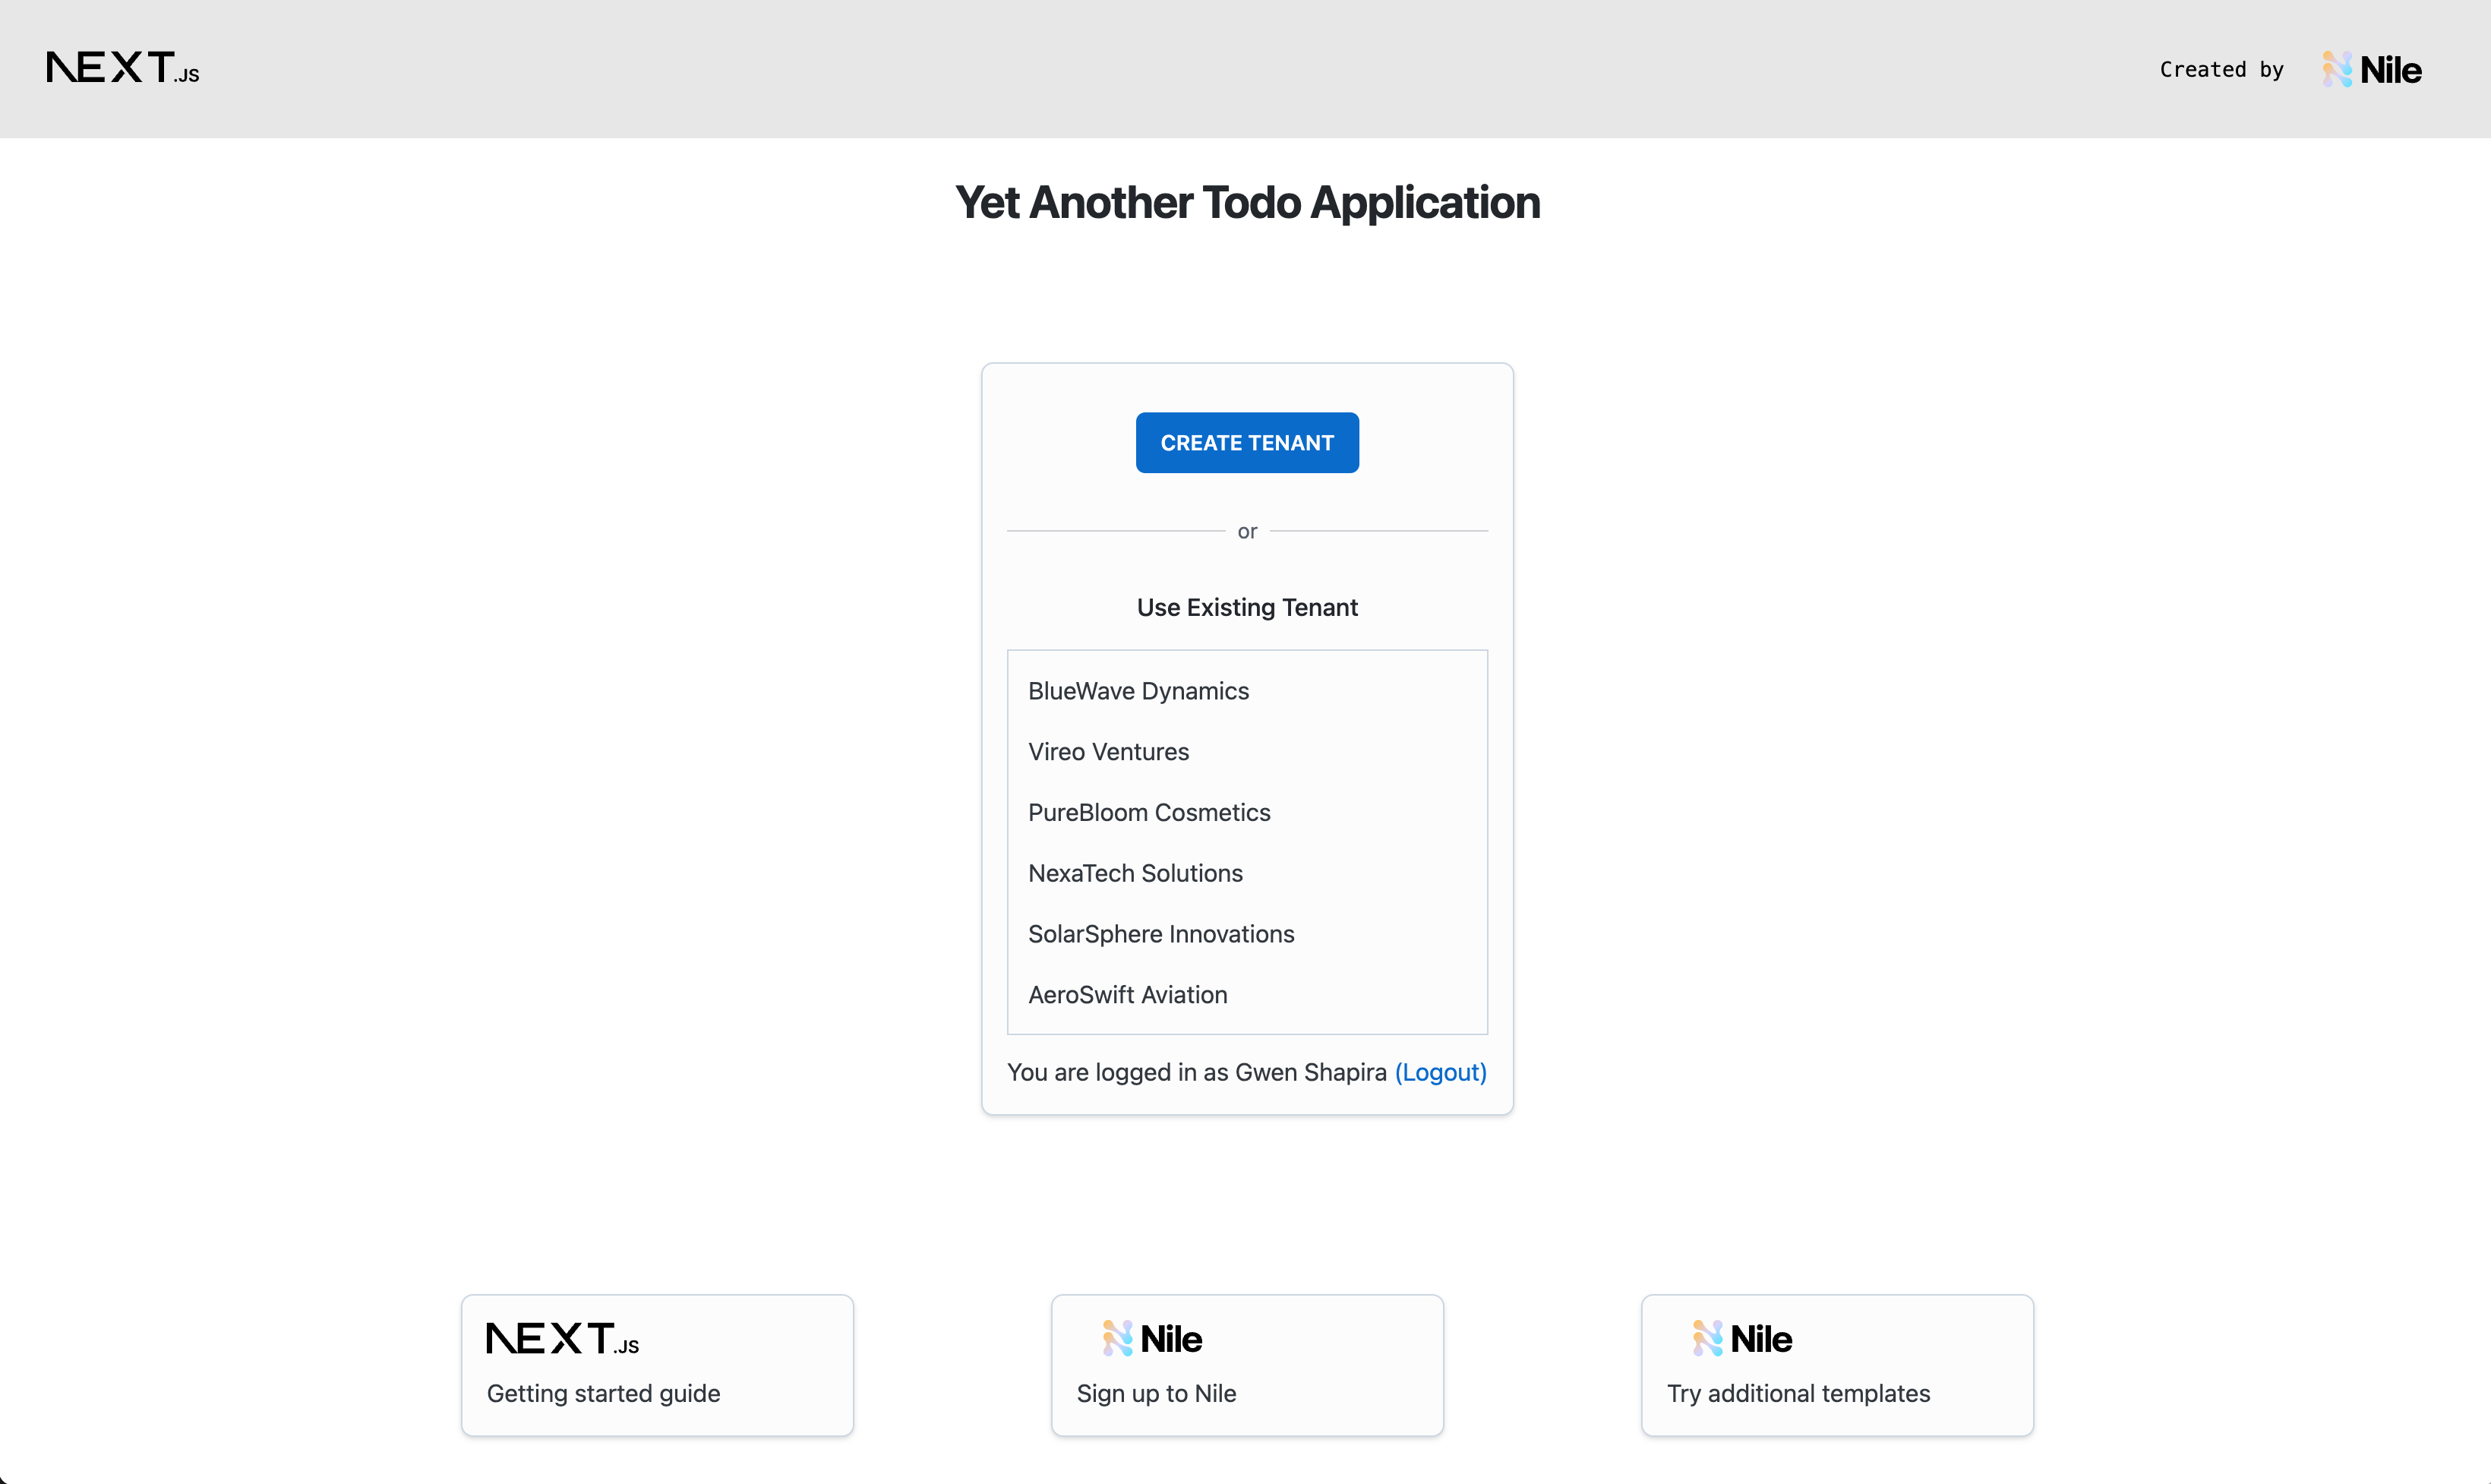 NextJS multi-tenant application with Nile